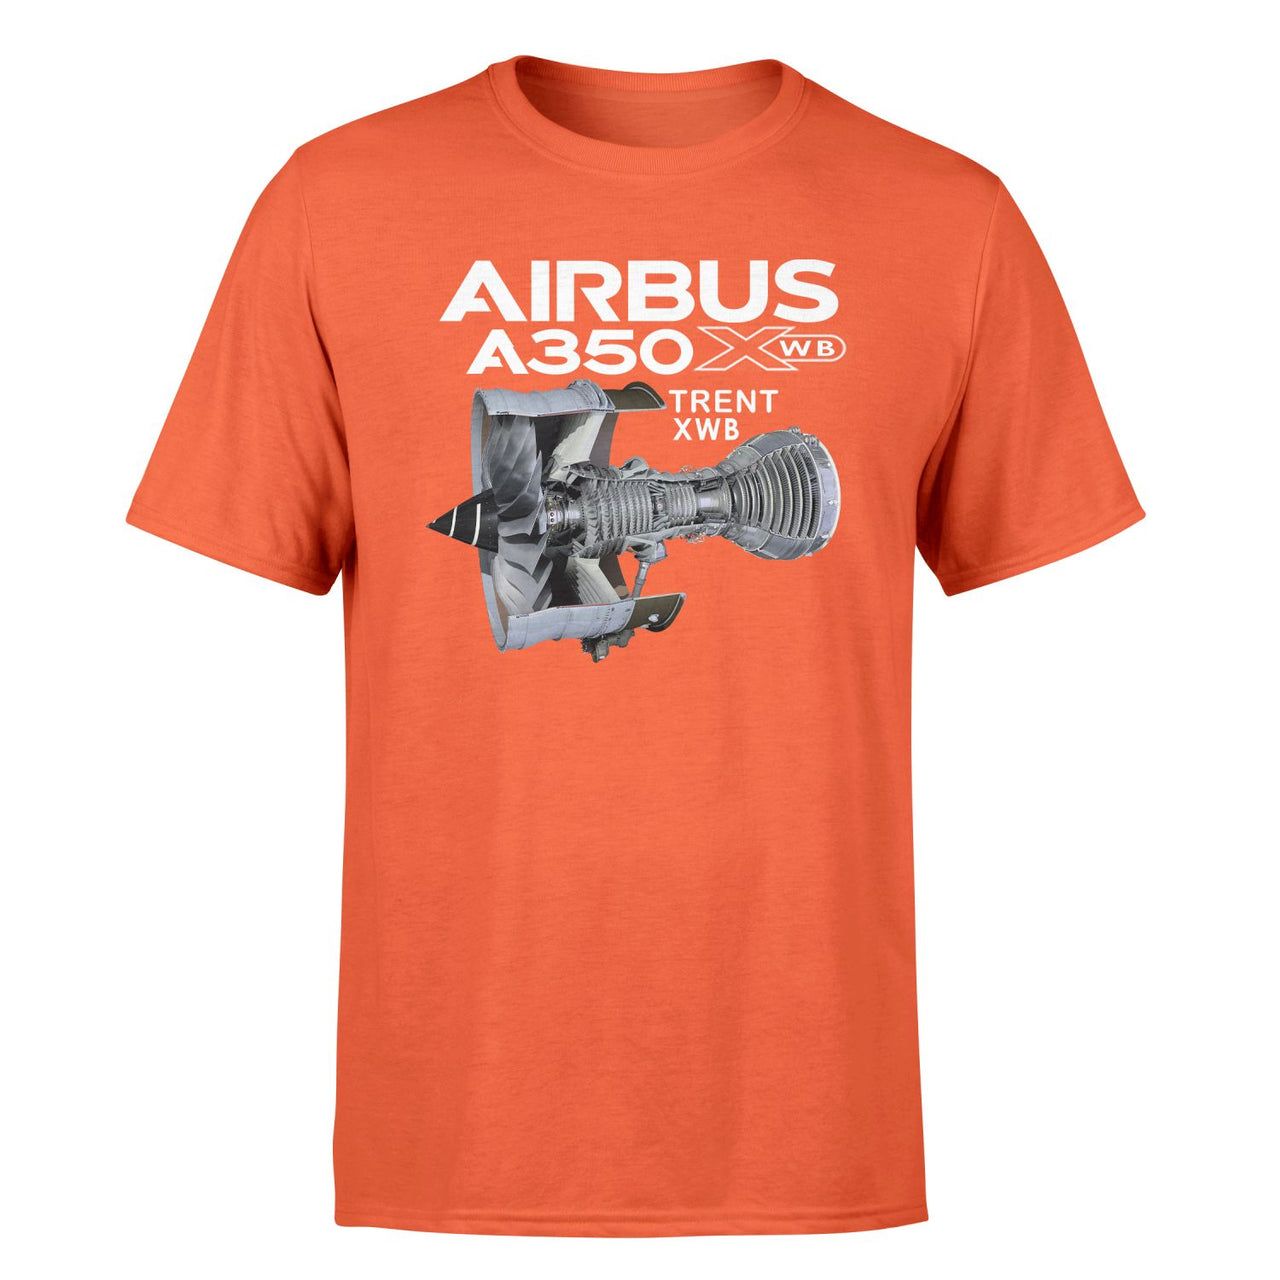 Airbus A350 & Trent Wxb Engine Designed T-Shirts